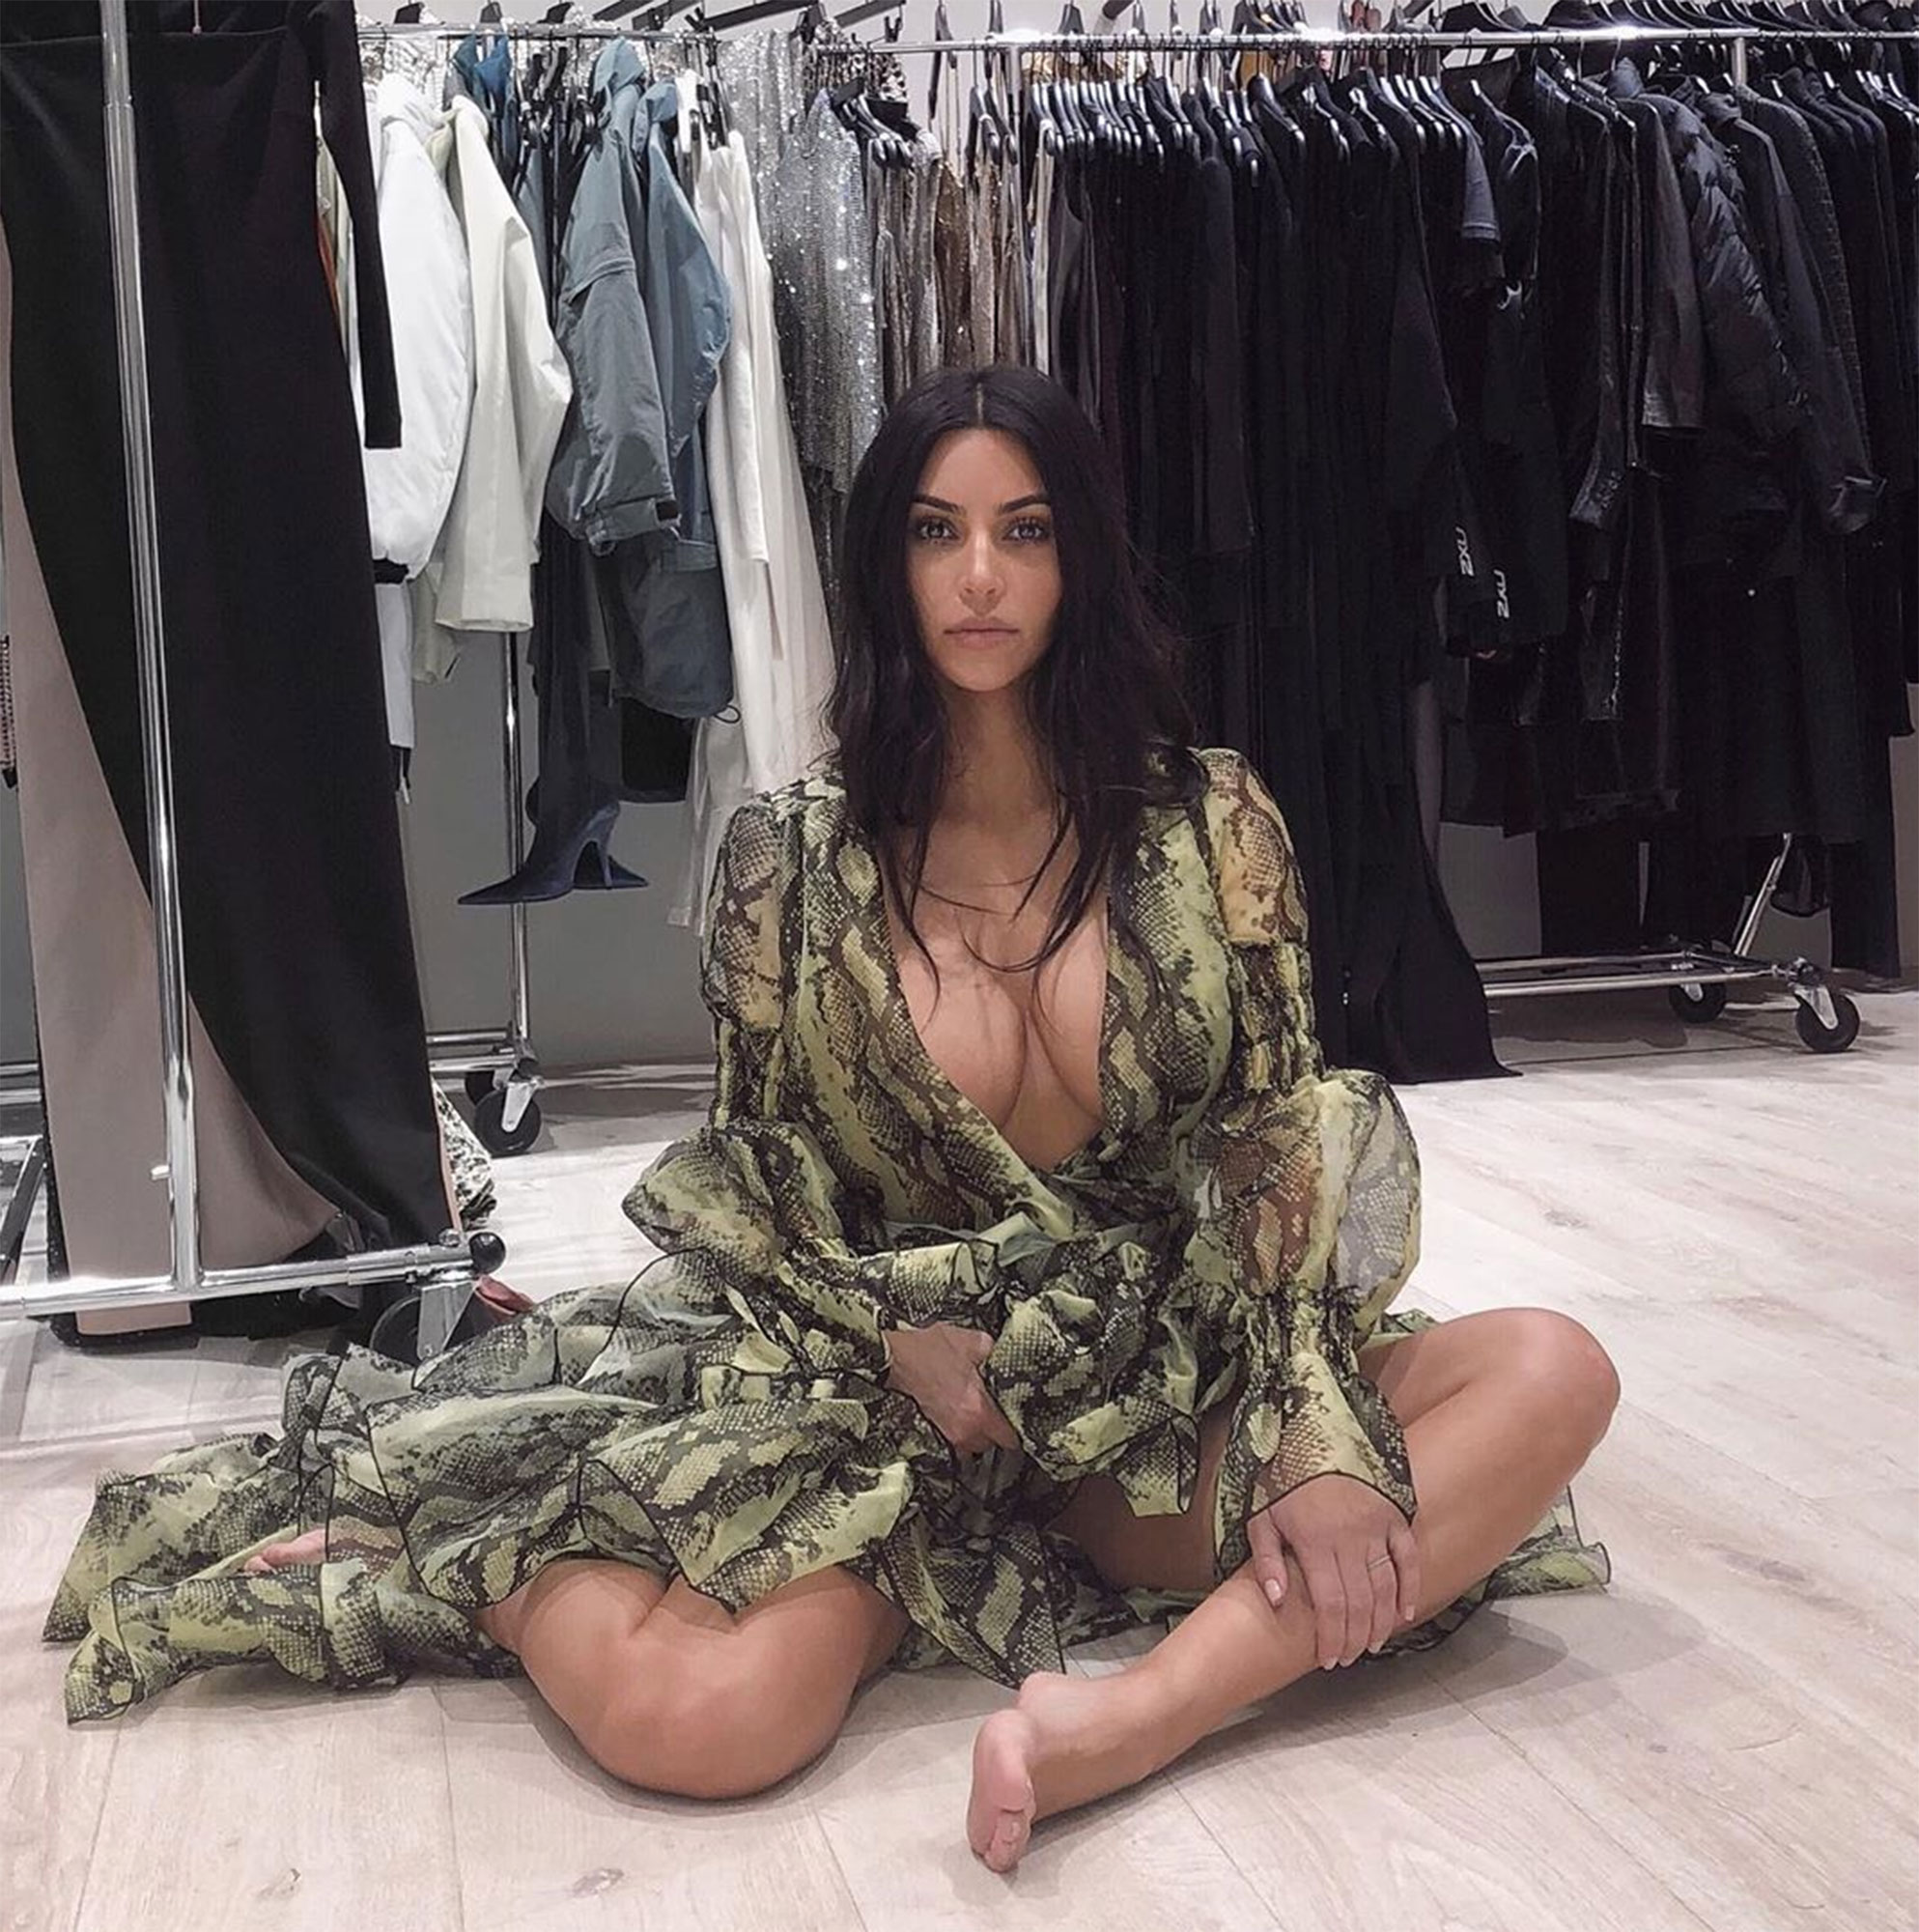 Inside Kim Kardashian's Red Carpet Fashion Fittings: Pics